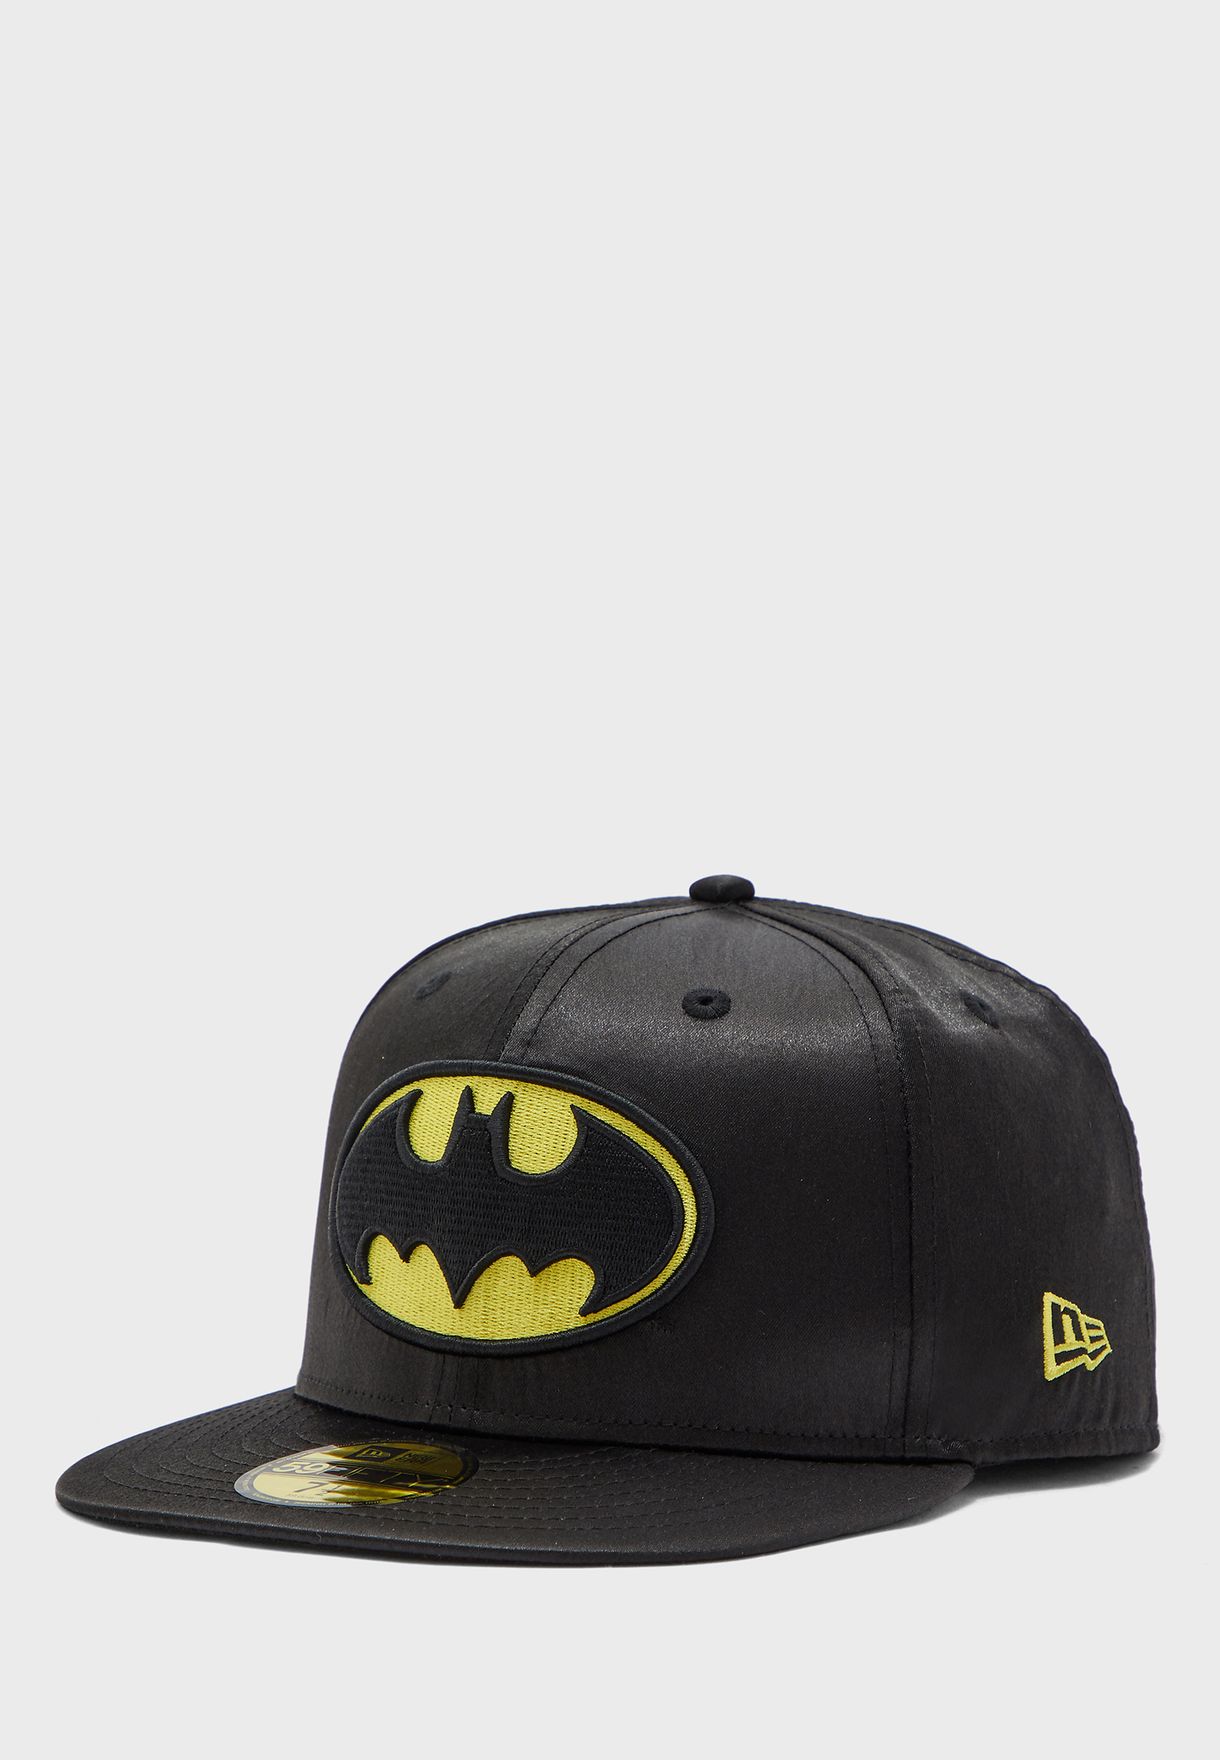 batman new era hat